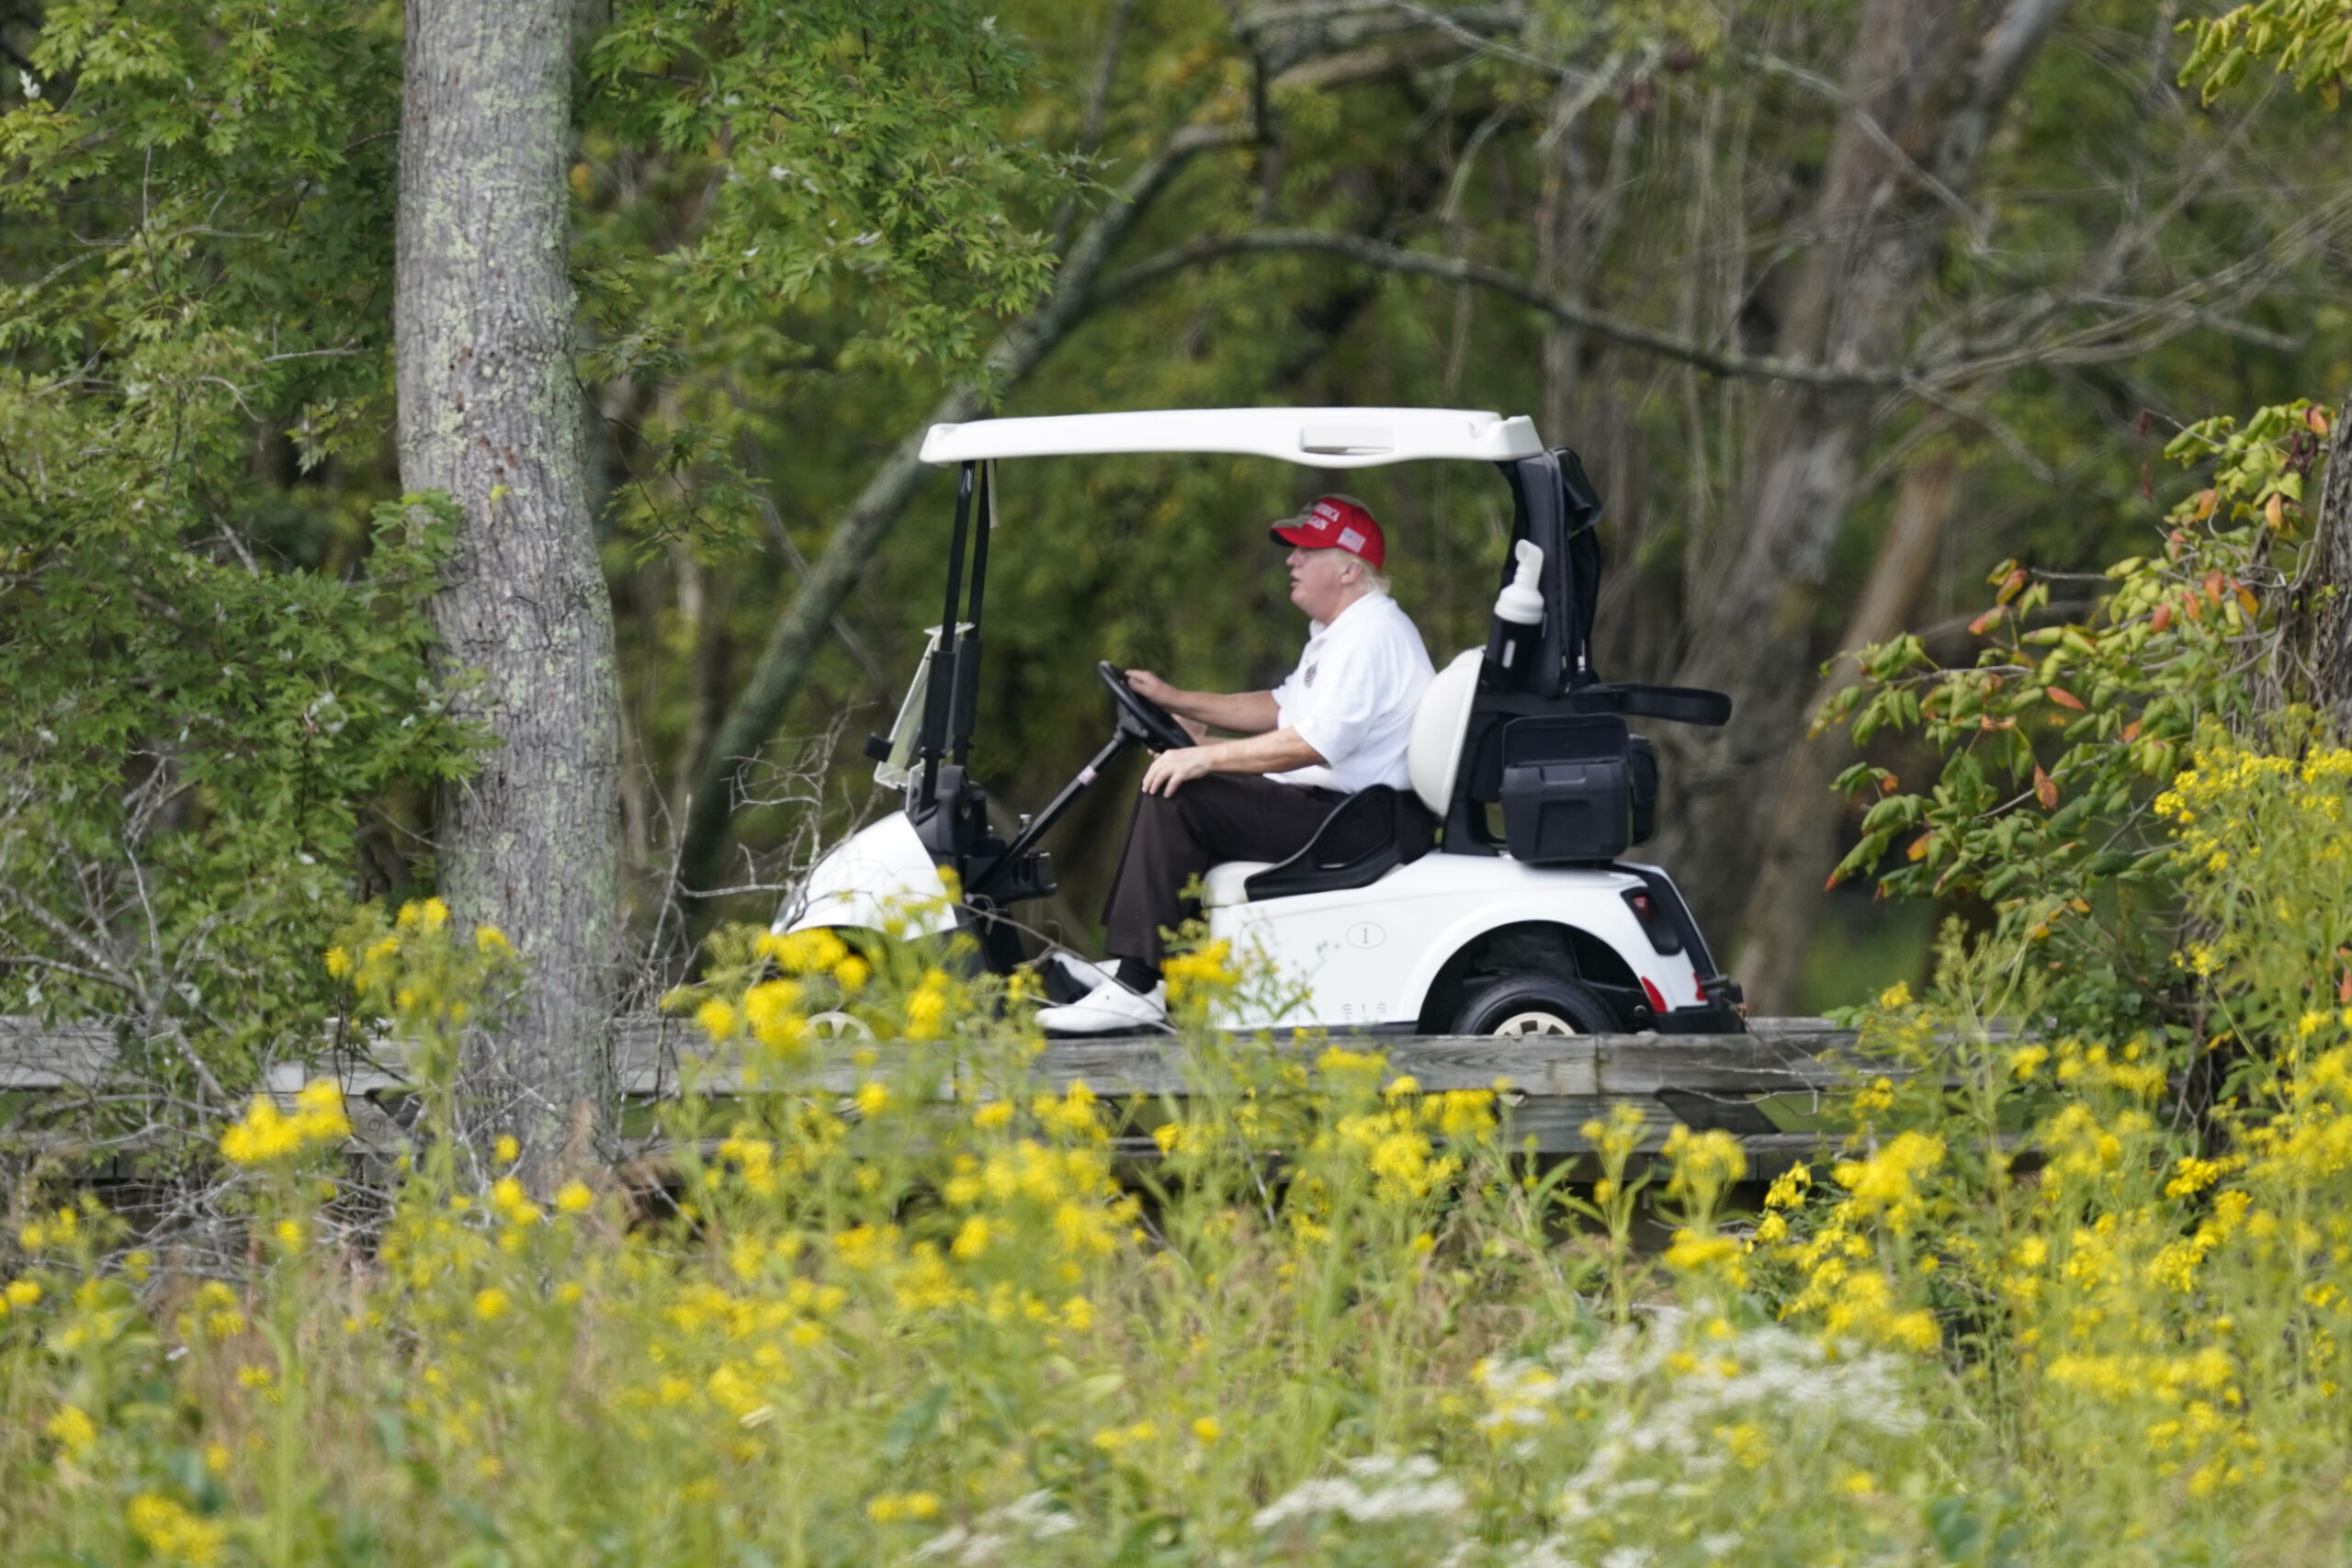 Former President Donald Trump rides around his golf course at Trump National Golf Club in Sterling, Va., Monday, Sept. 12, 2022. (AP Photo/Alex Brandon)